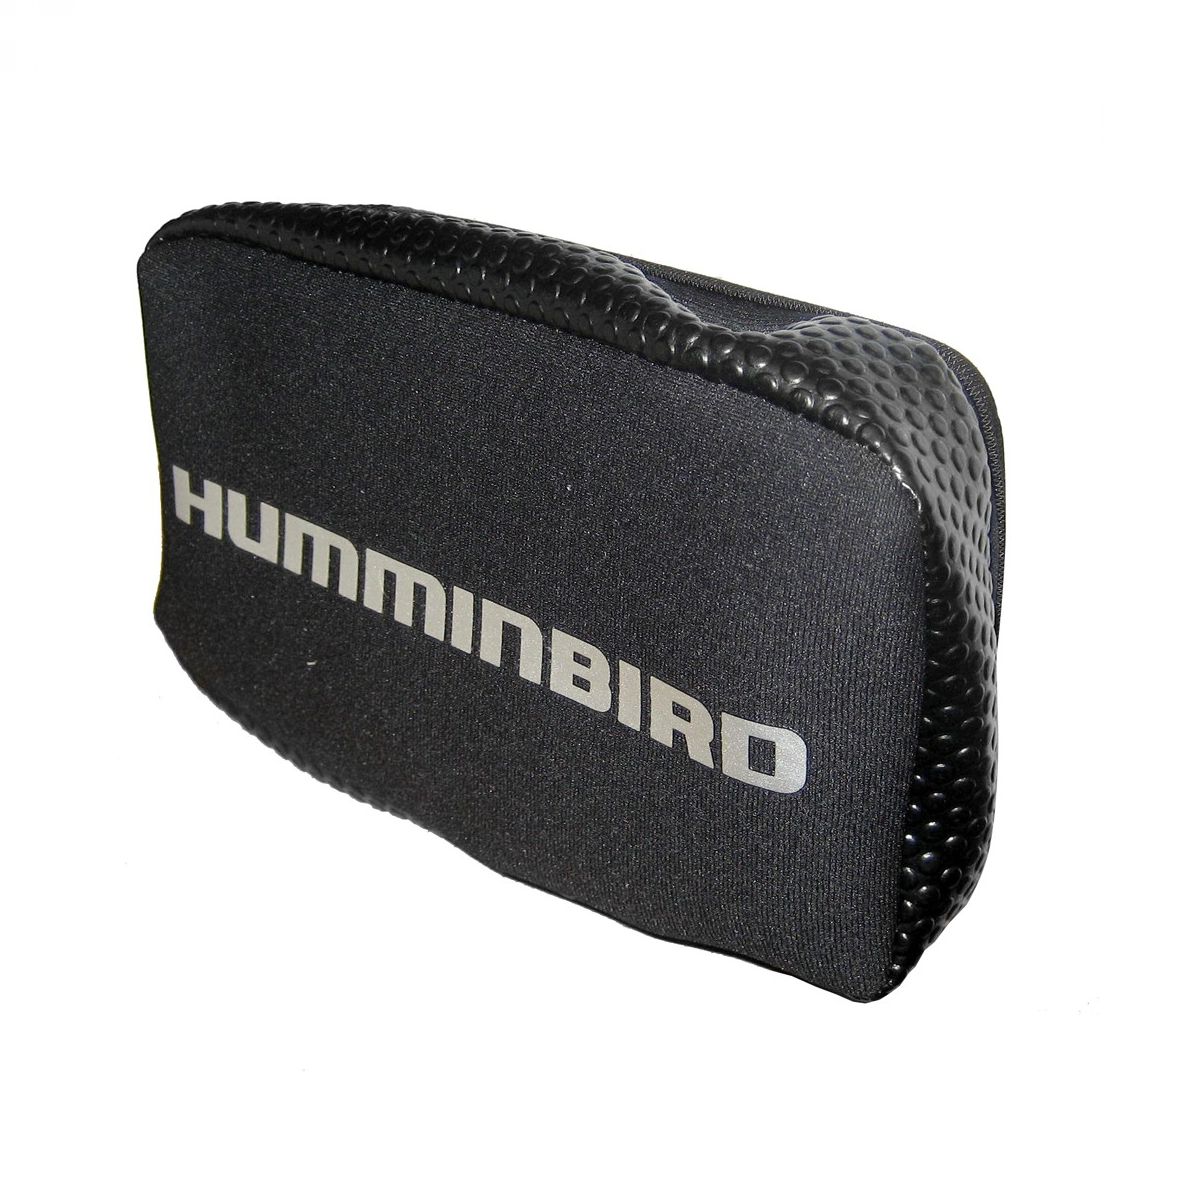 Humminbird UC H5 zaštitni poklopac za Helix 5